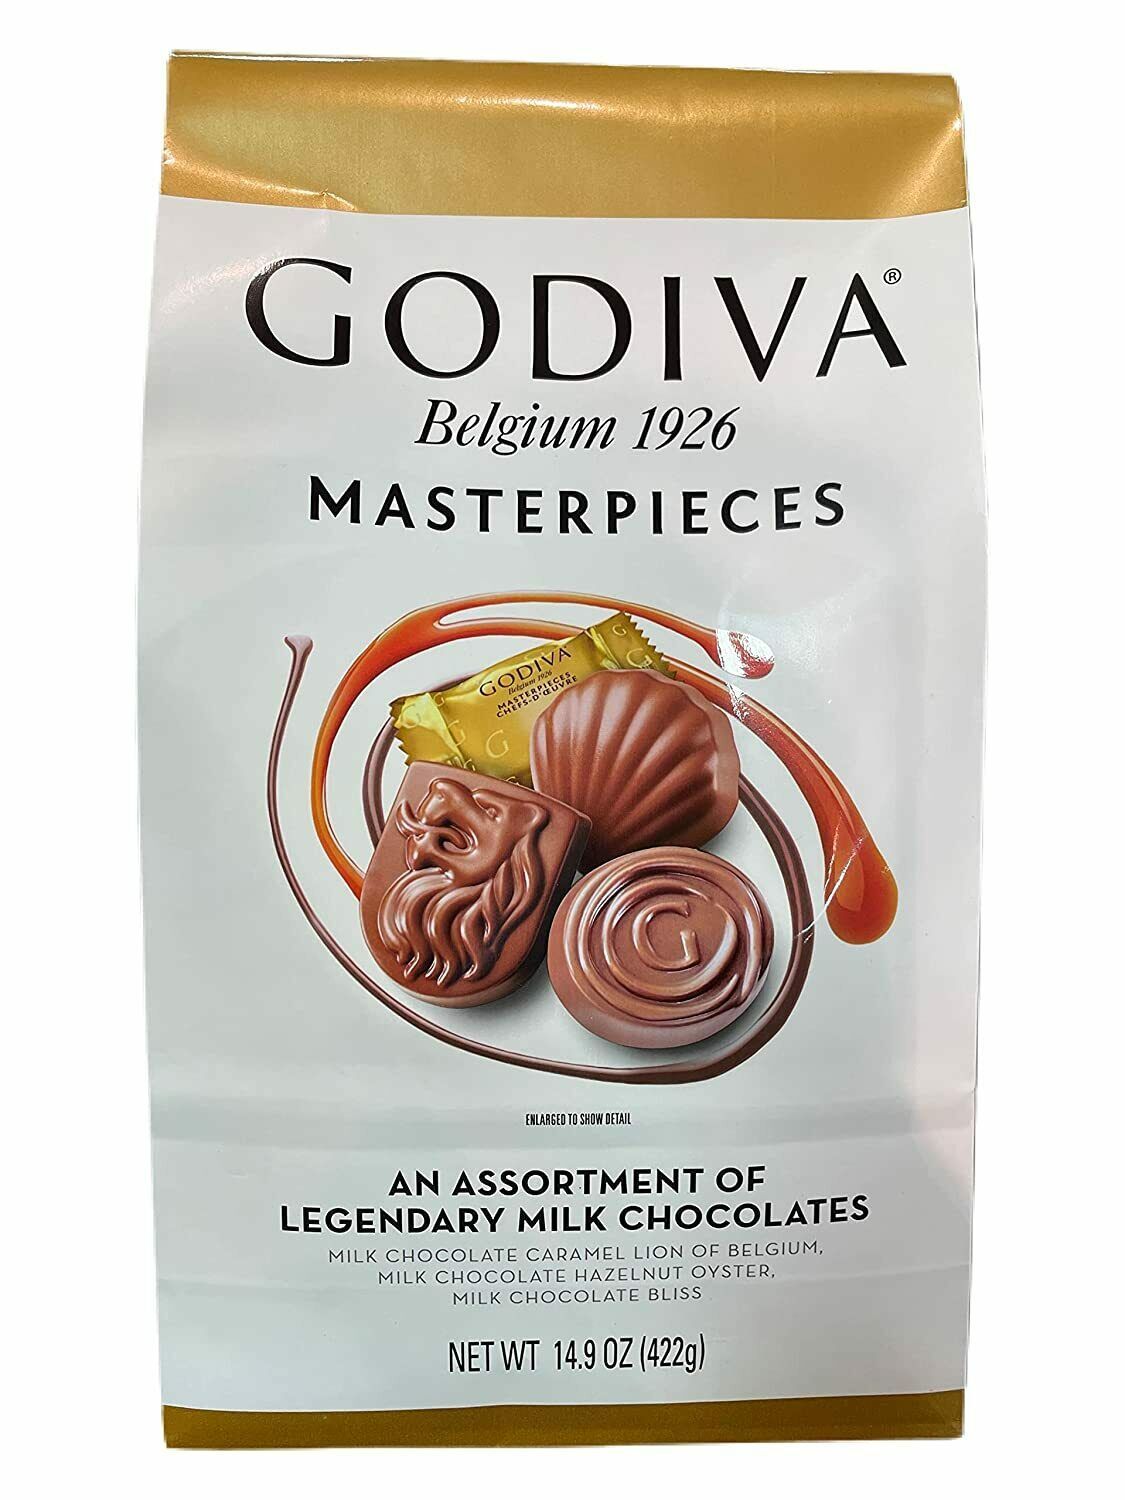 Primary image for Godiva Belgium Masterpieces Assortment of Legendary Milk Chocolate 14.9 oz 422 g